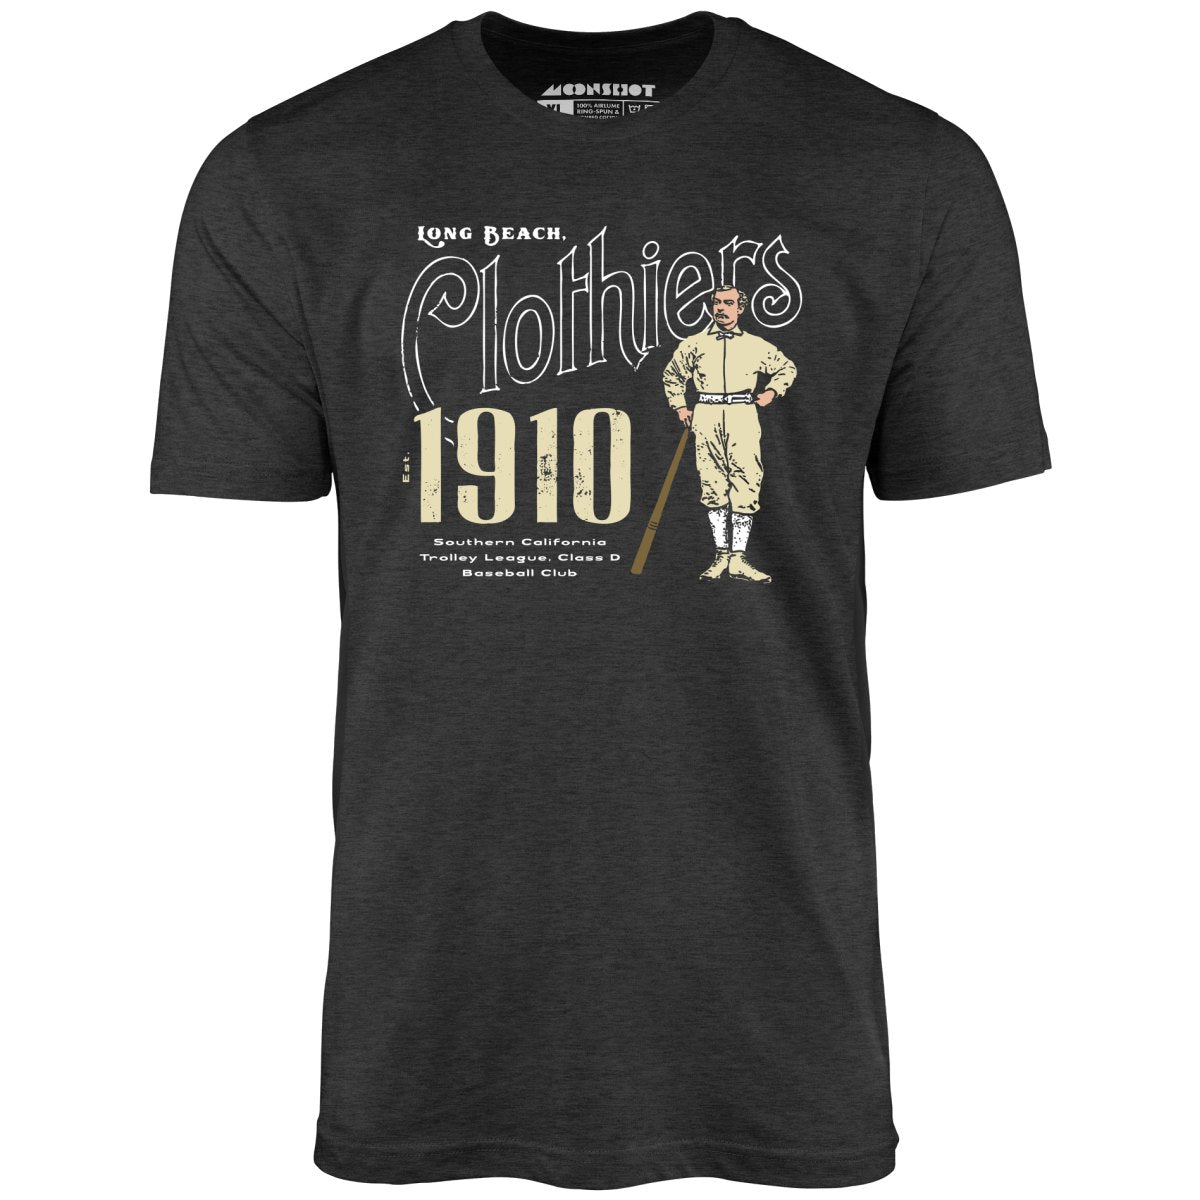 Long Beach Clothiers - California - Vintage Defunct Baseball Teams - Unisex T-Shirt